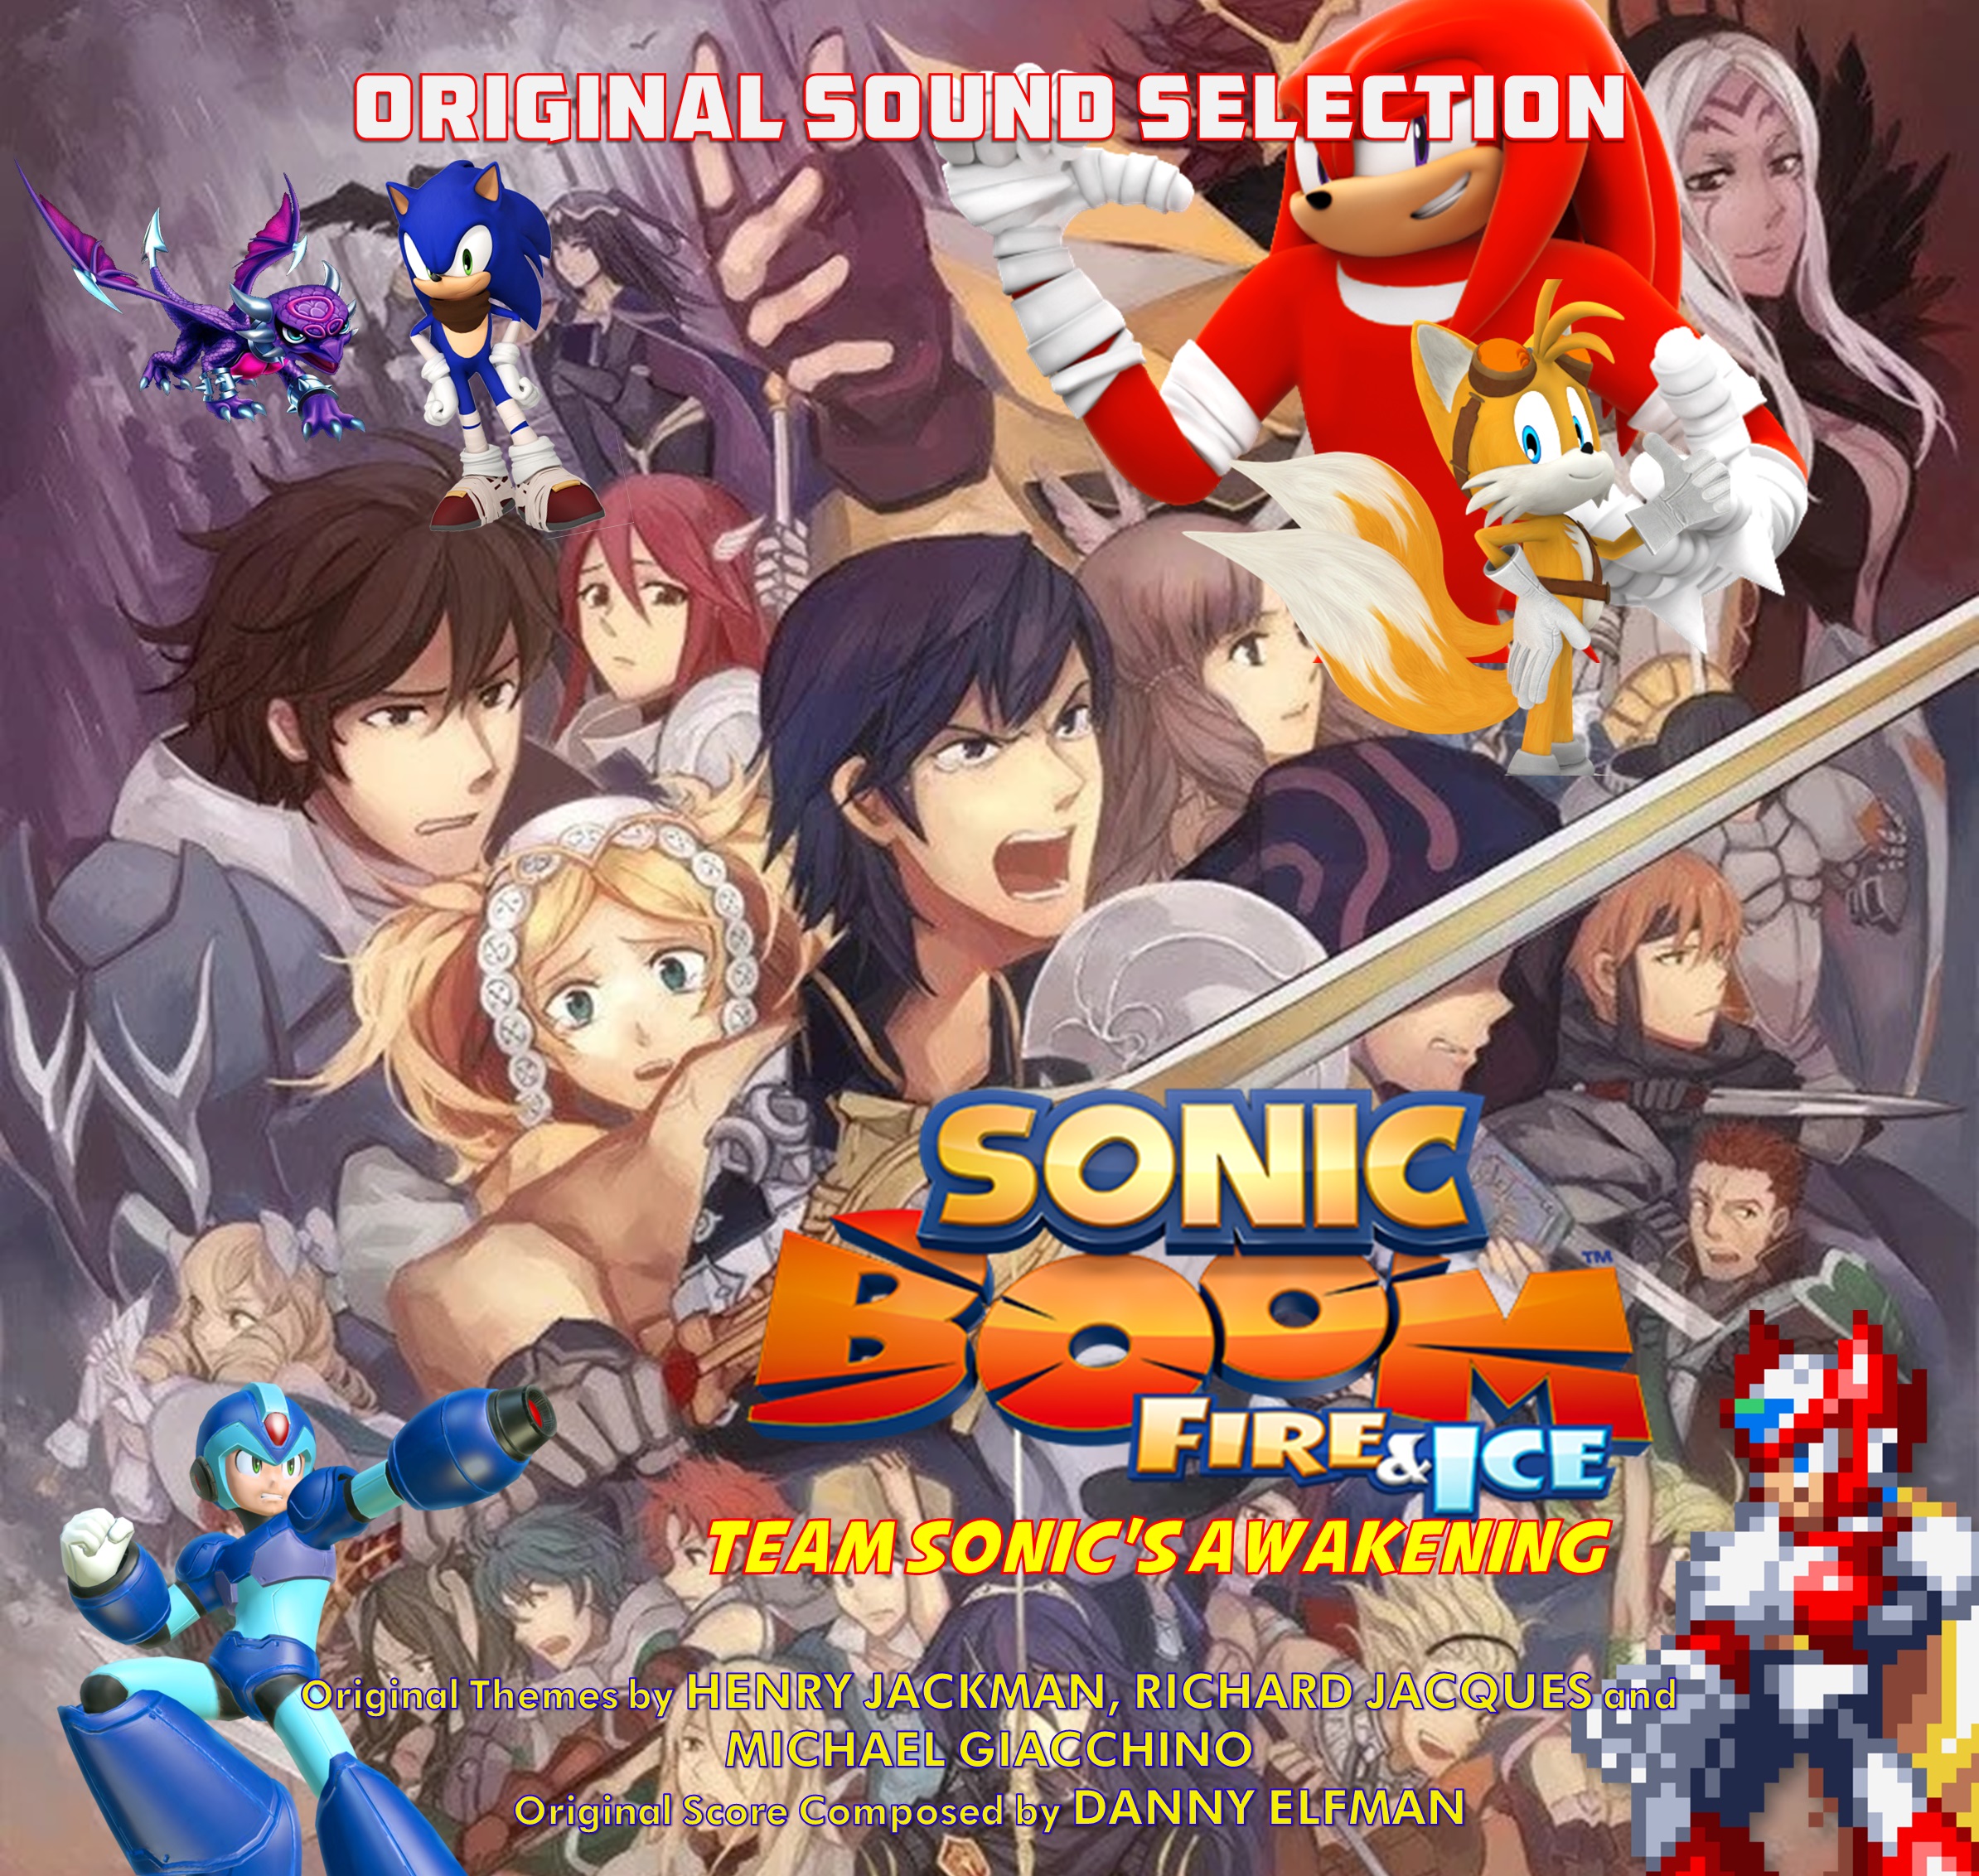 Stream Sonic 3 invincibility/Super Sonic by Isotropic Phoenix